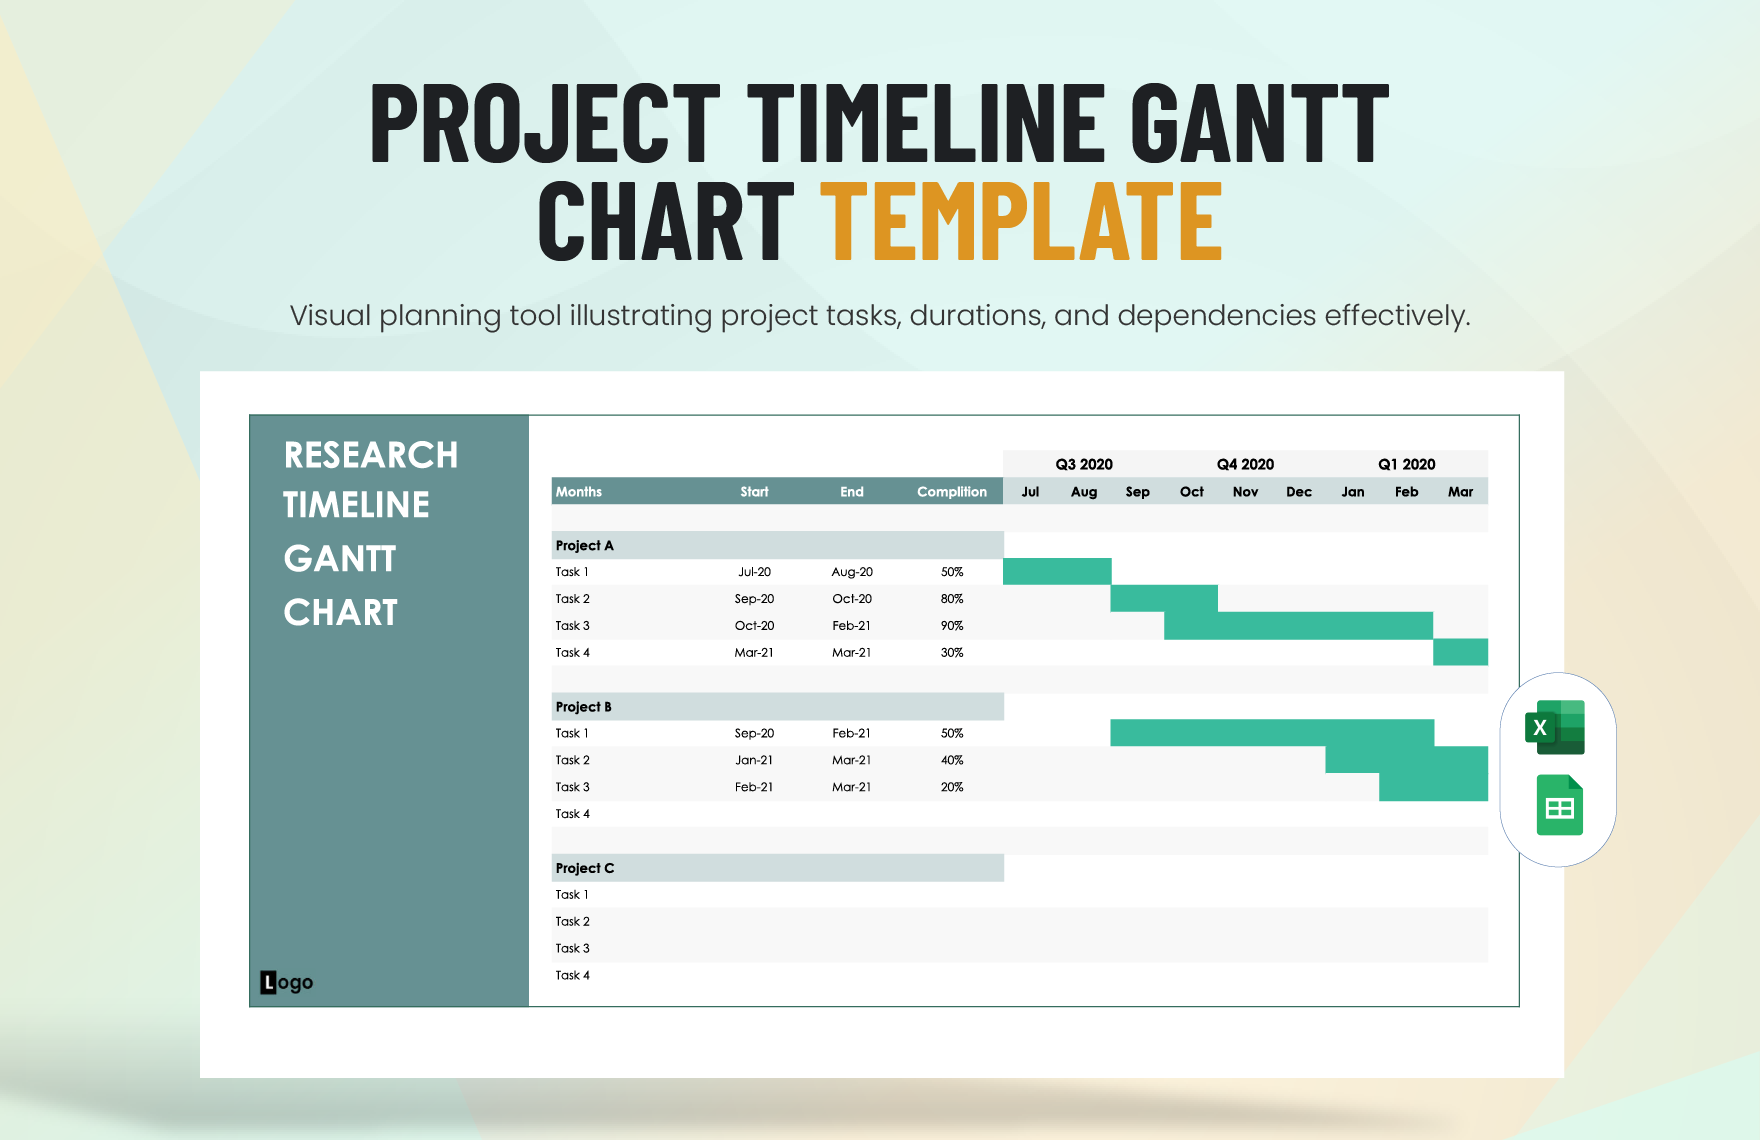 Project Timeline Gantt Chart Template in Excel, Google Sheets